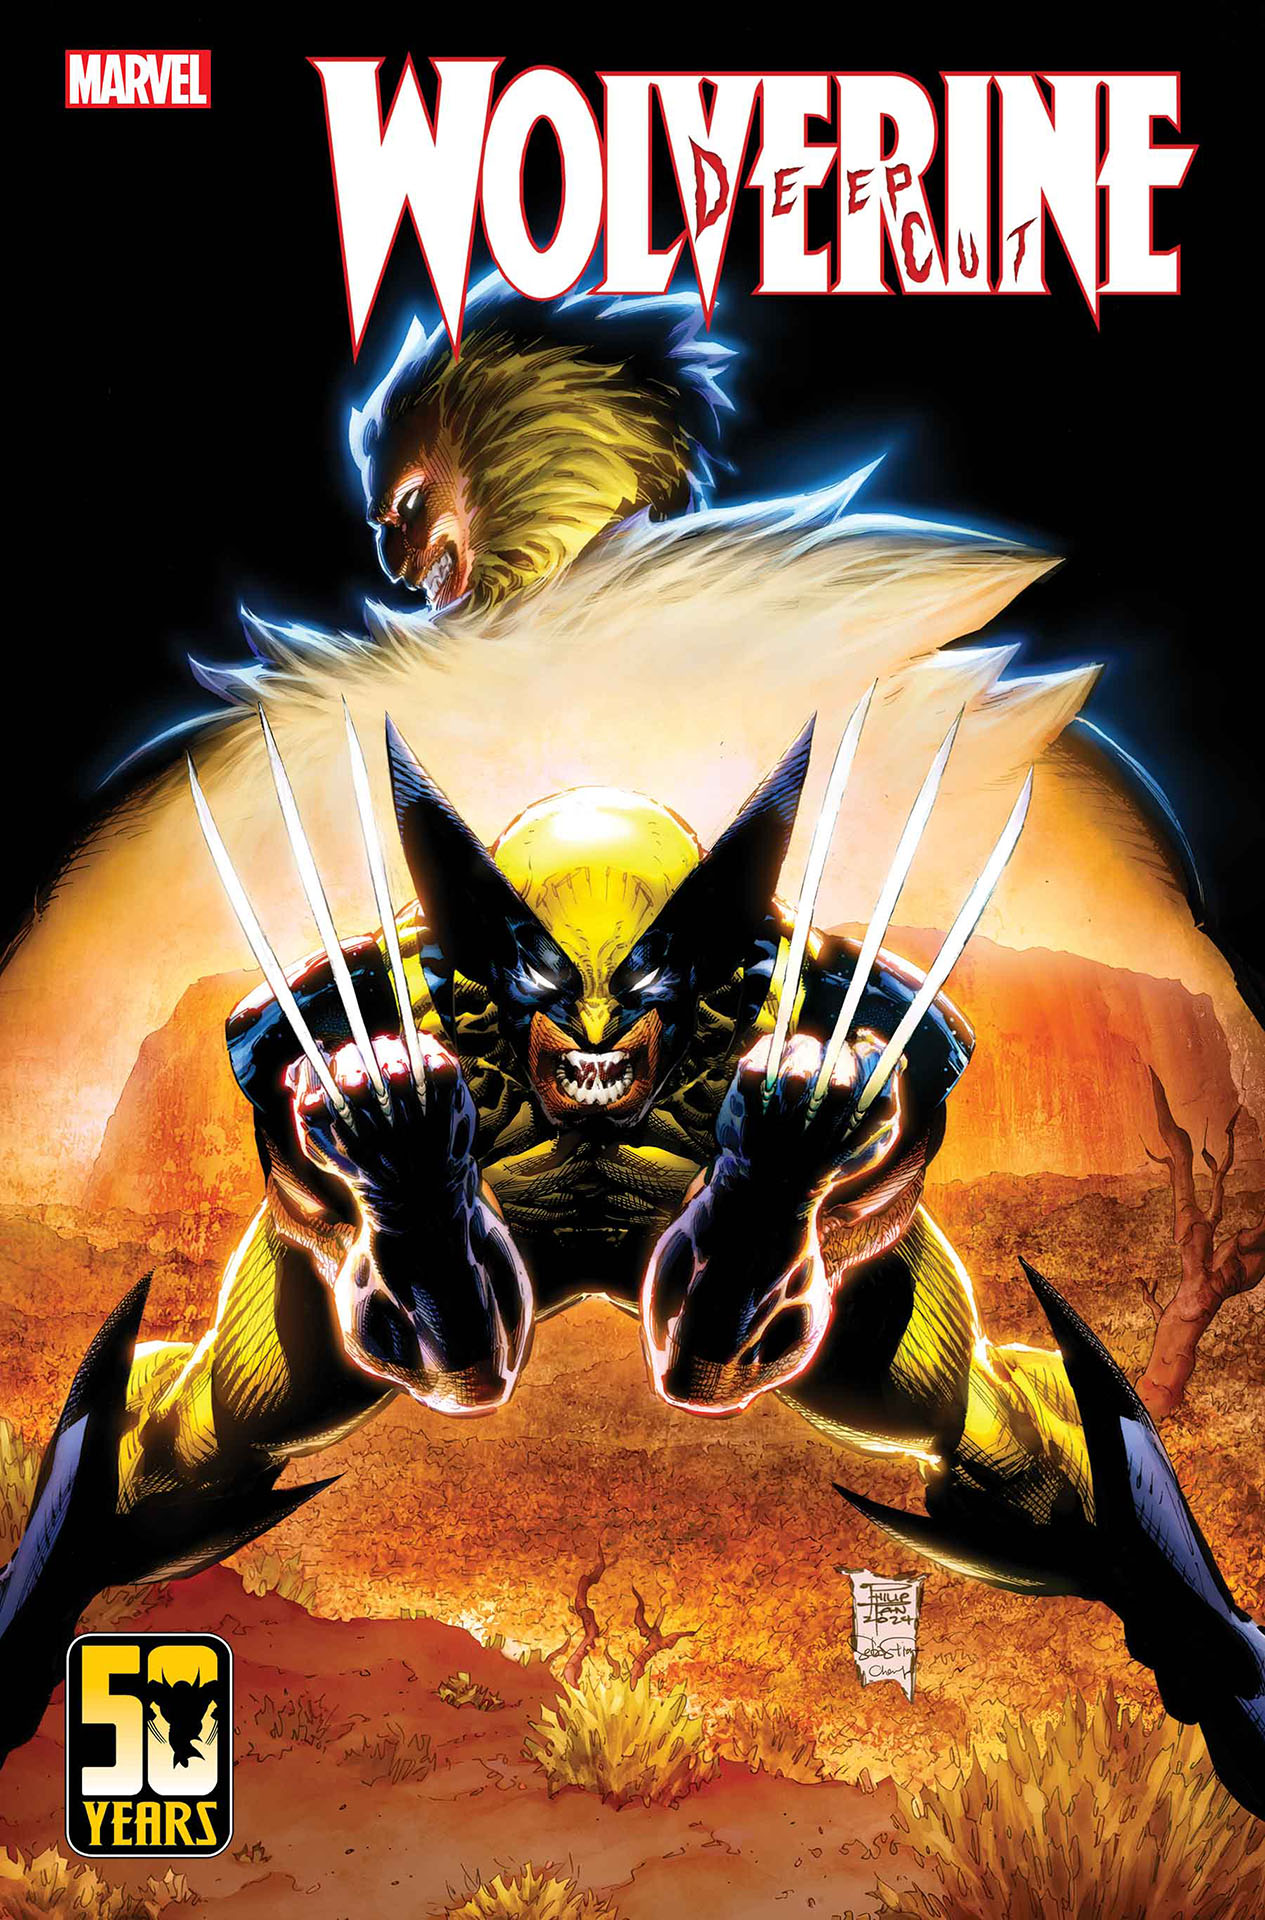 Wolverine: Deep Reduce #1 duvet